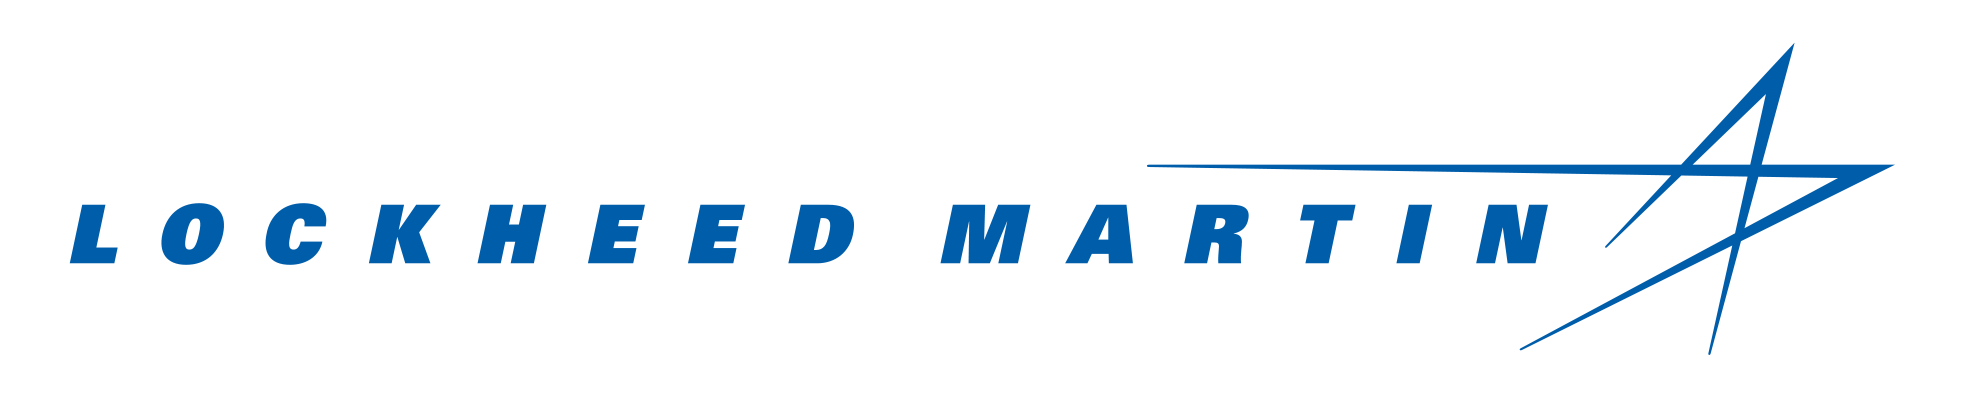 PNGPIX-COM-Lockheed-Martin-Logo-PNG-Transparent.png